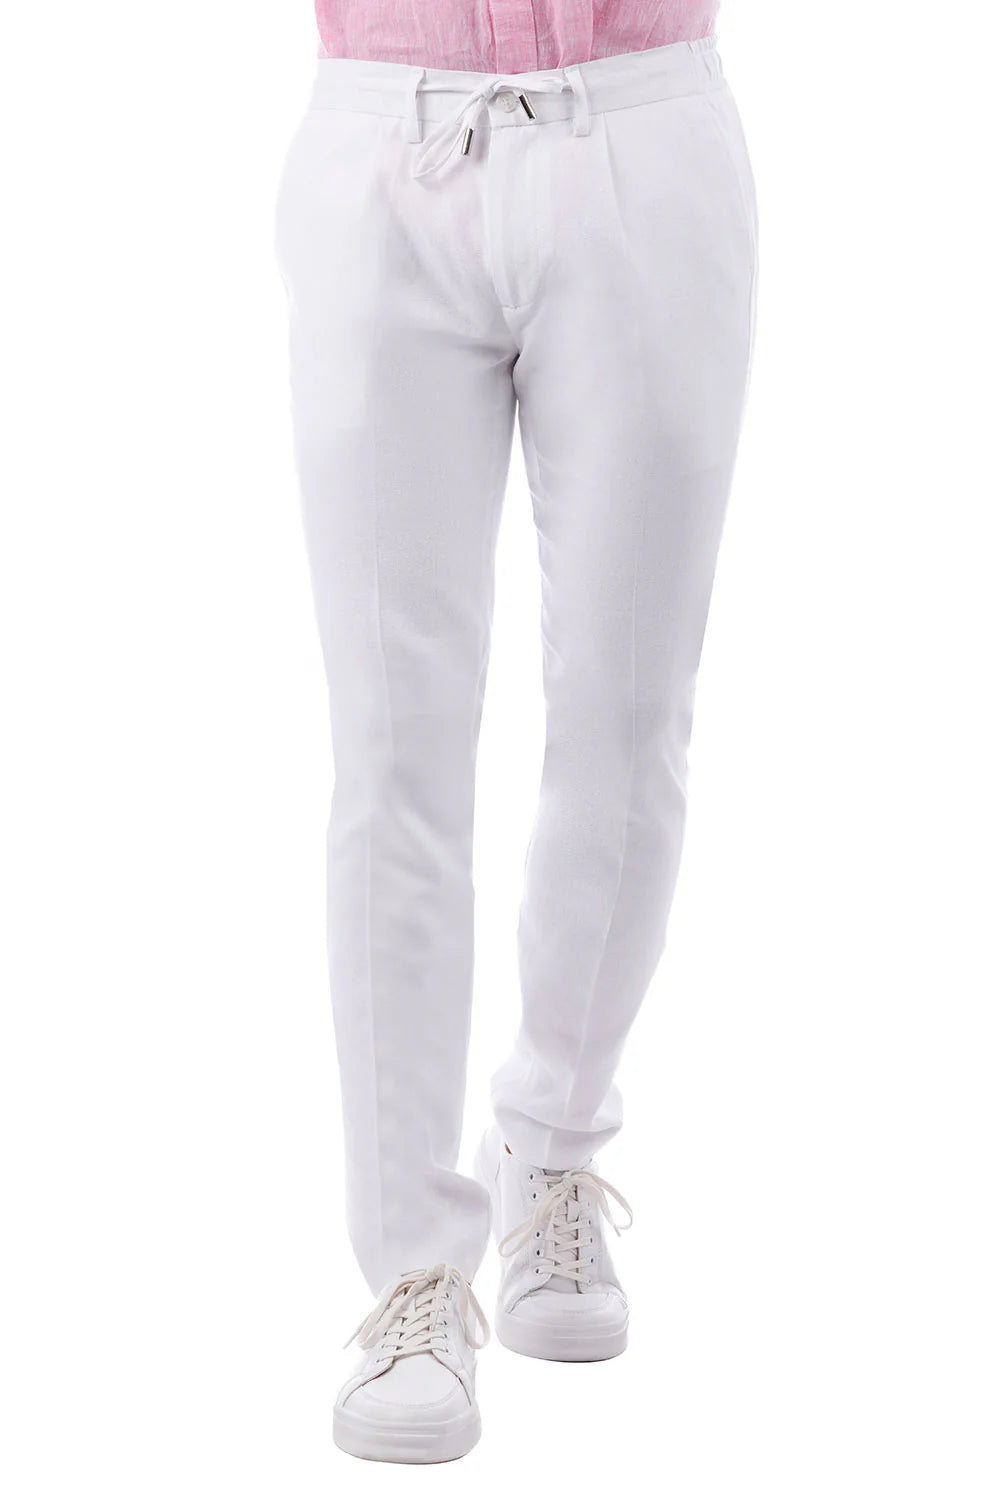 Barabas Mens Slim Fit Solid White Linen Cotton Blend Flat Front Dress Pants